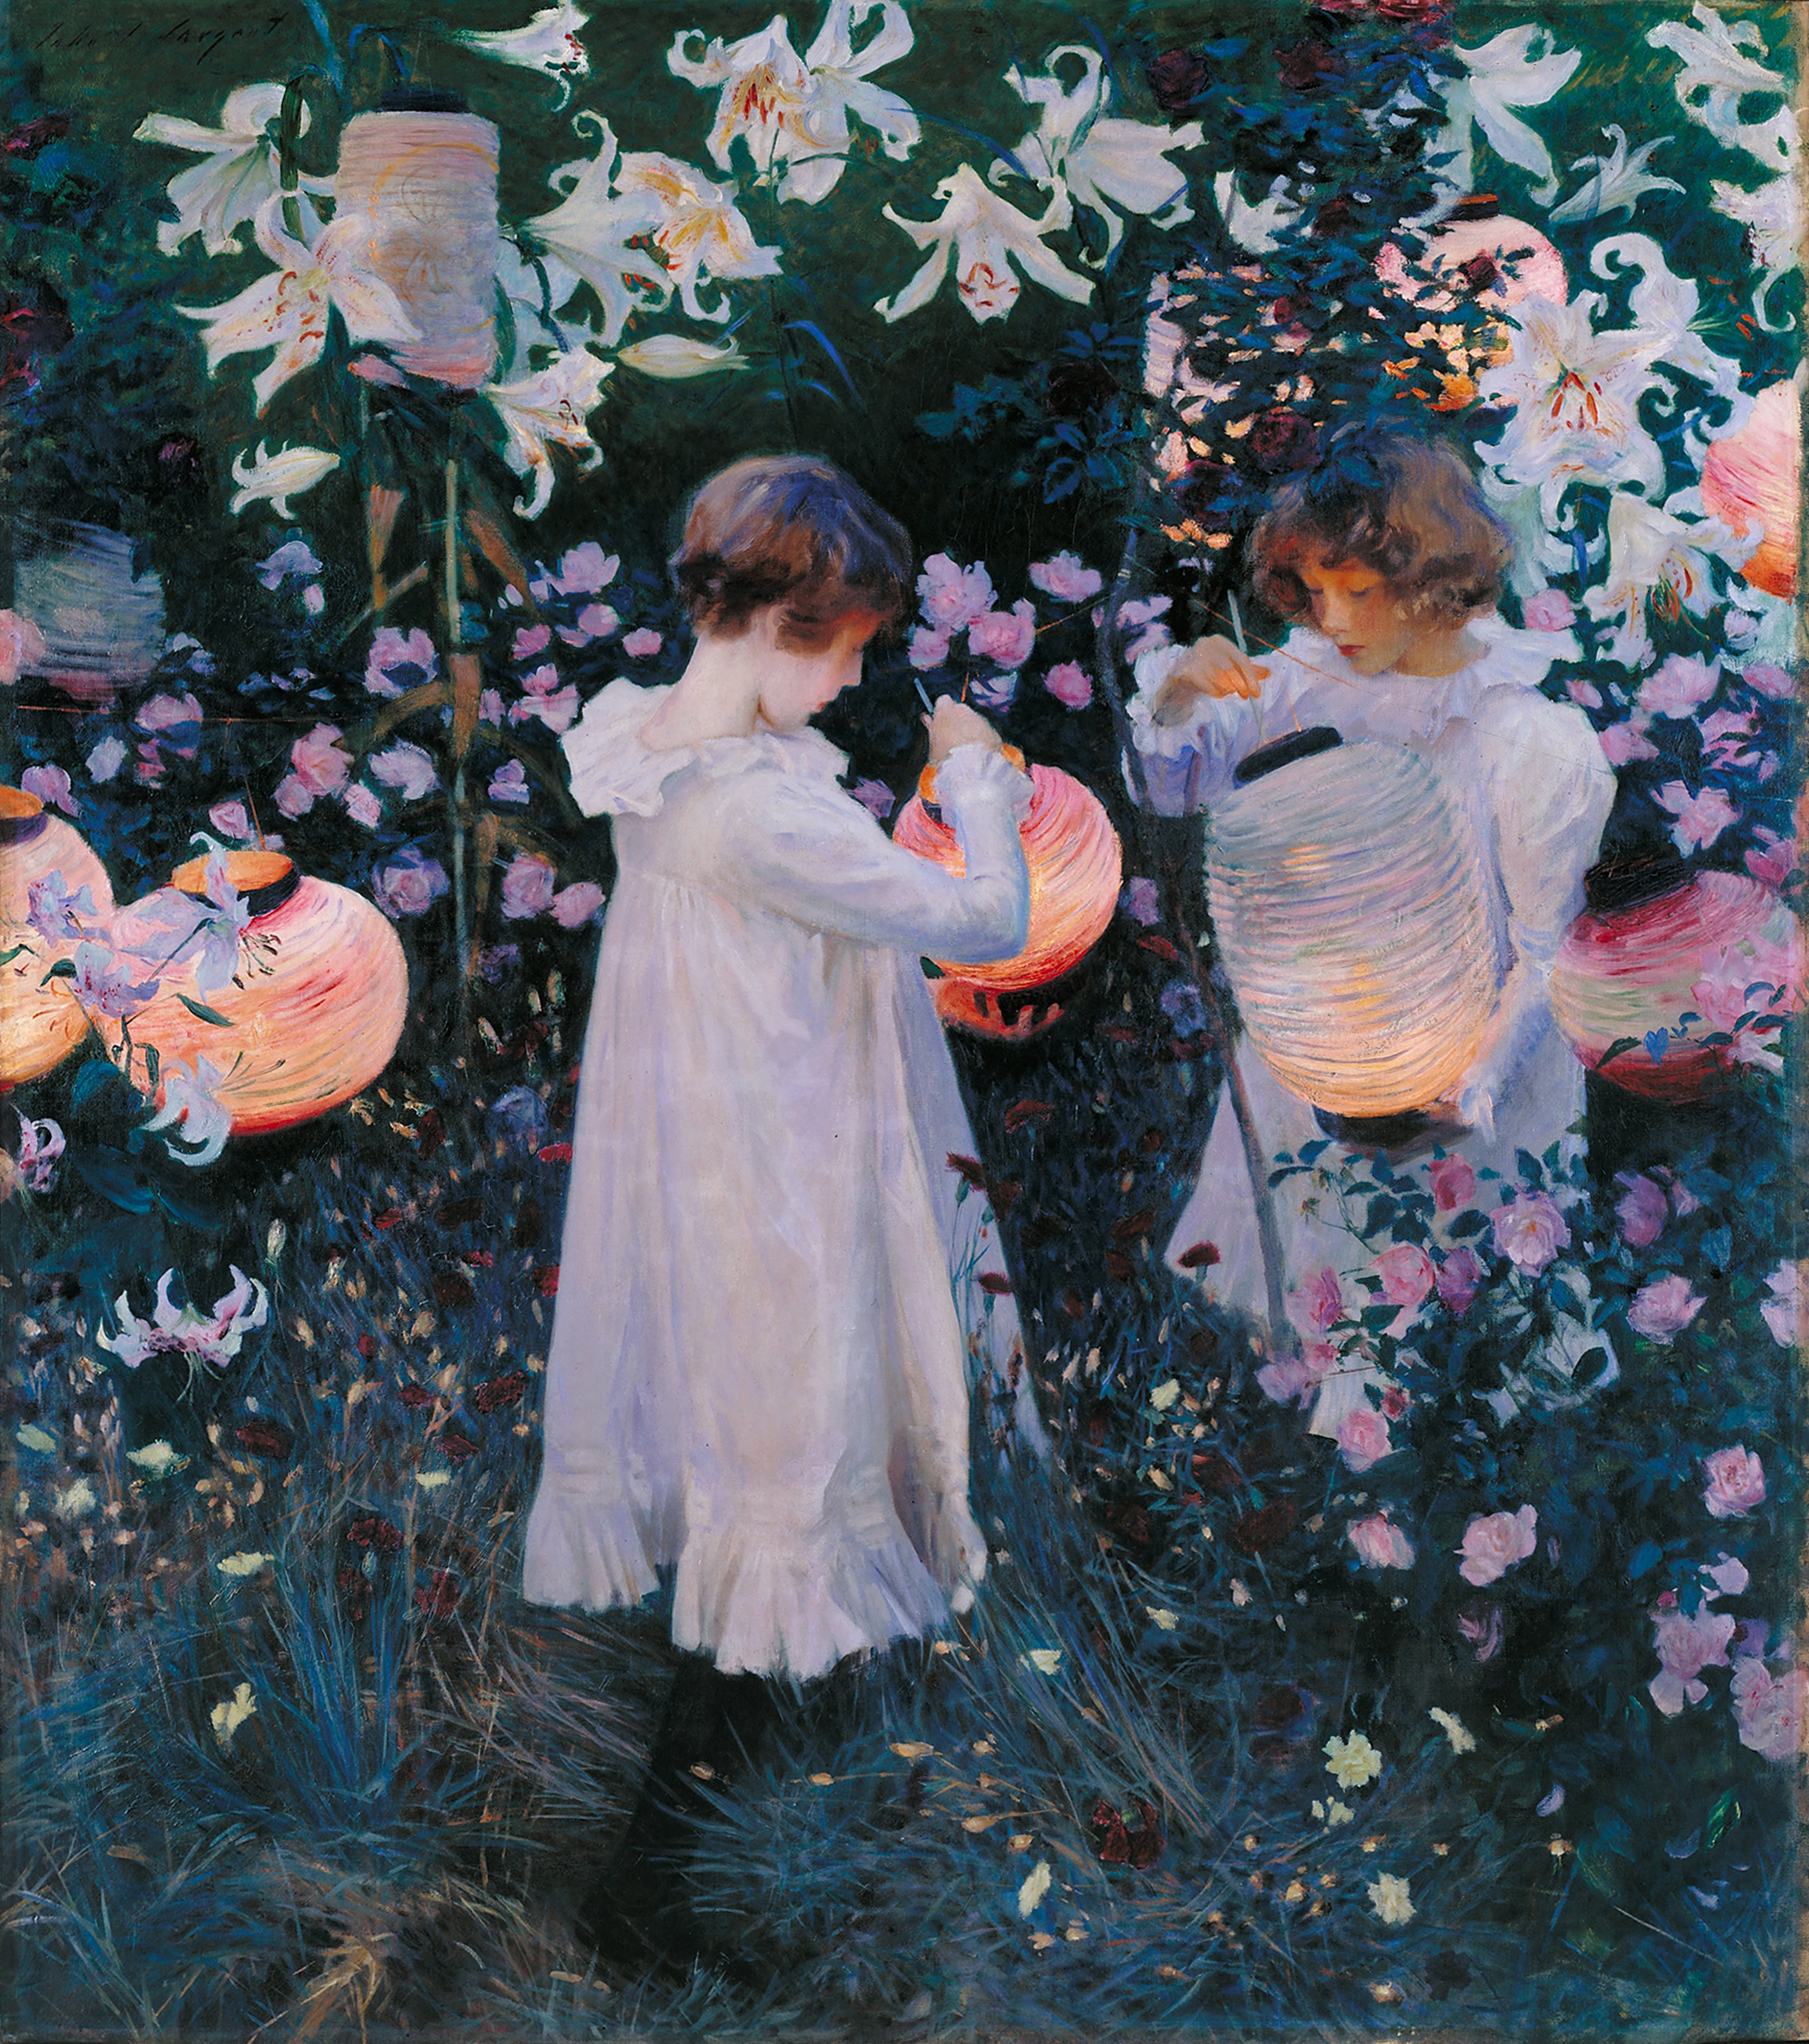 "Carnation, Lily, Lily, Rose," by John Singer Sargent.